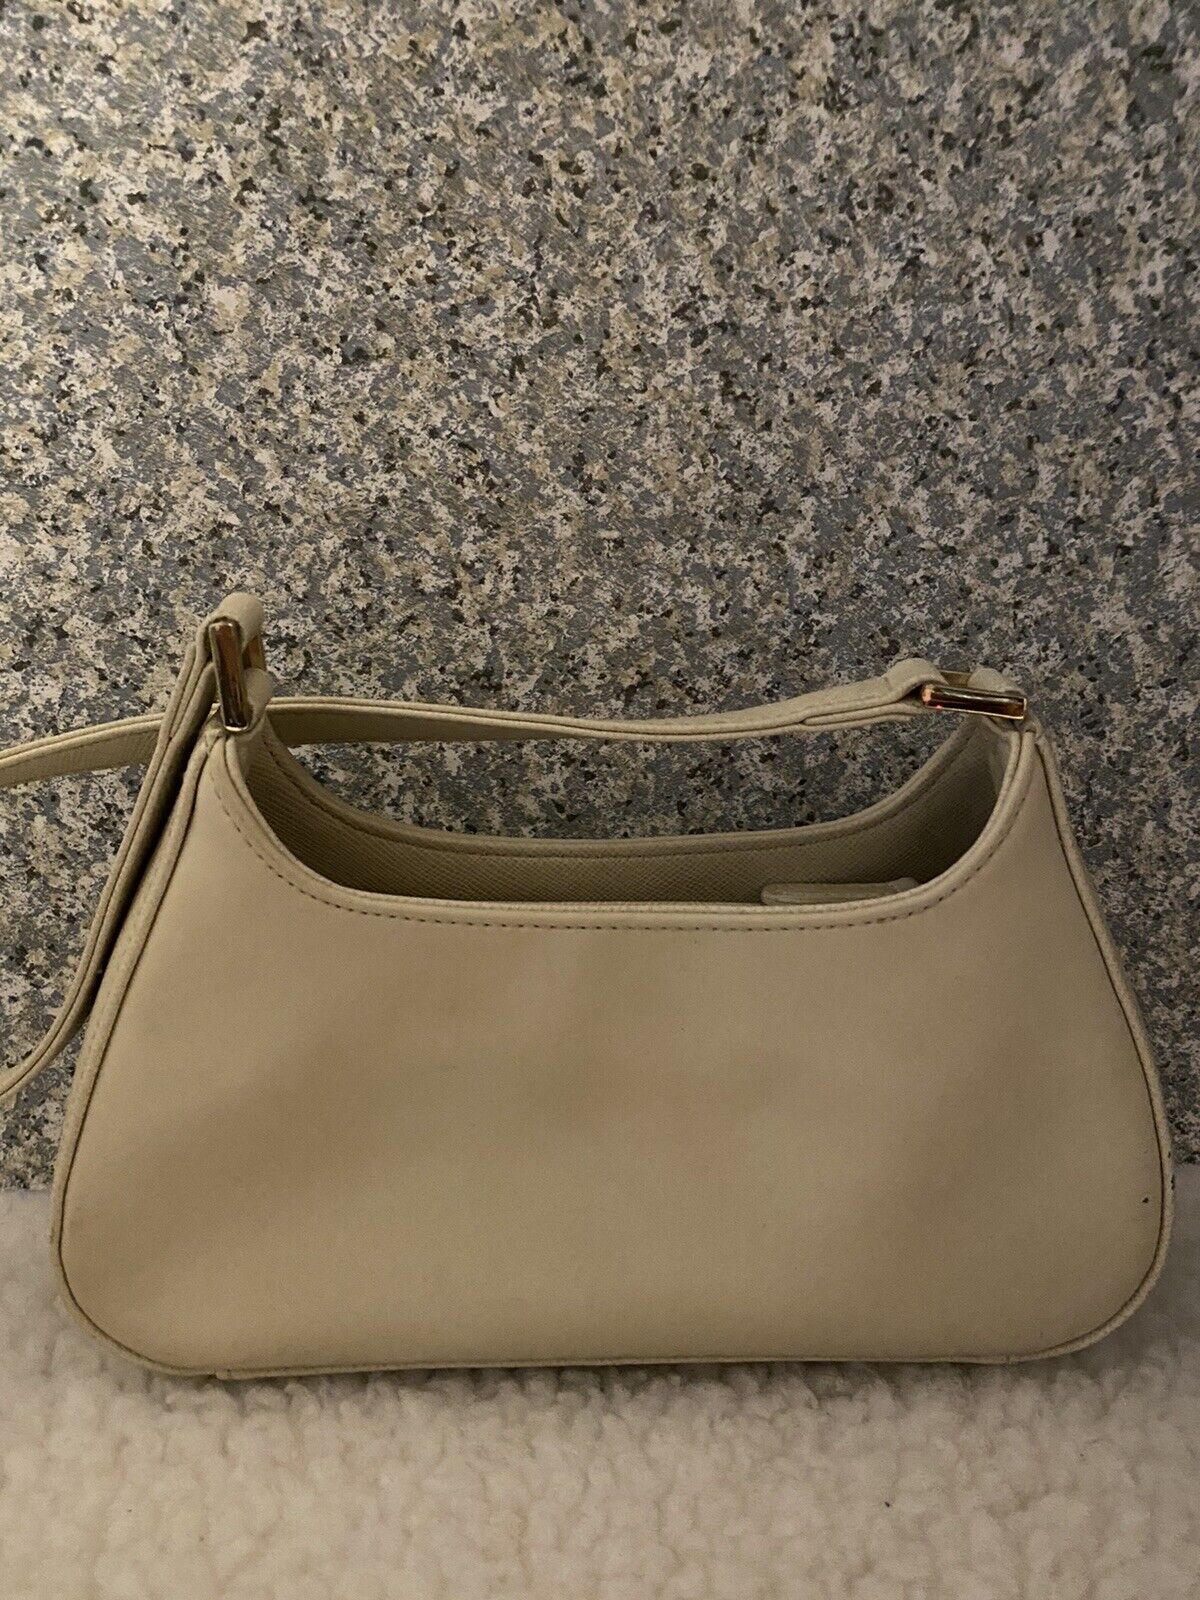 Vintage Small Liz Claiborne purse - image 2